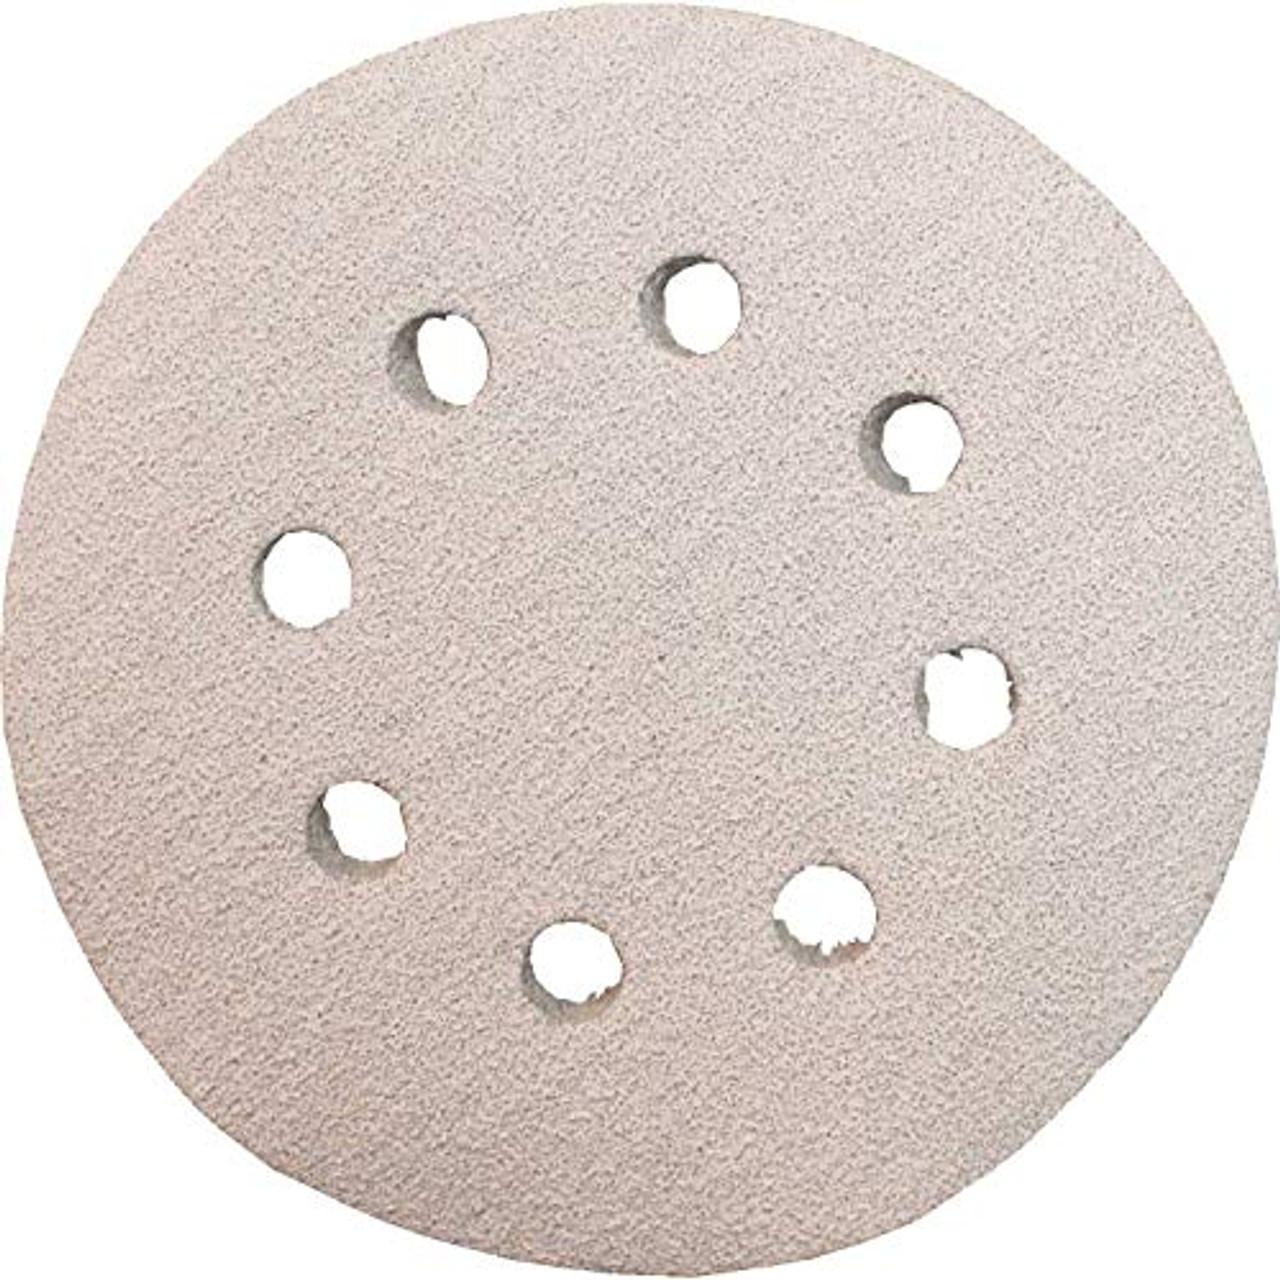 Makita 794522-7 5-Inch 240-Grit Abrasive Disc, 5 per package